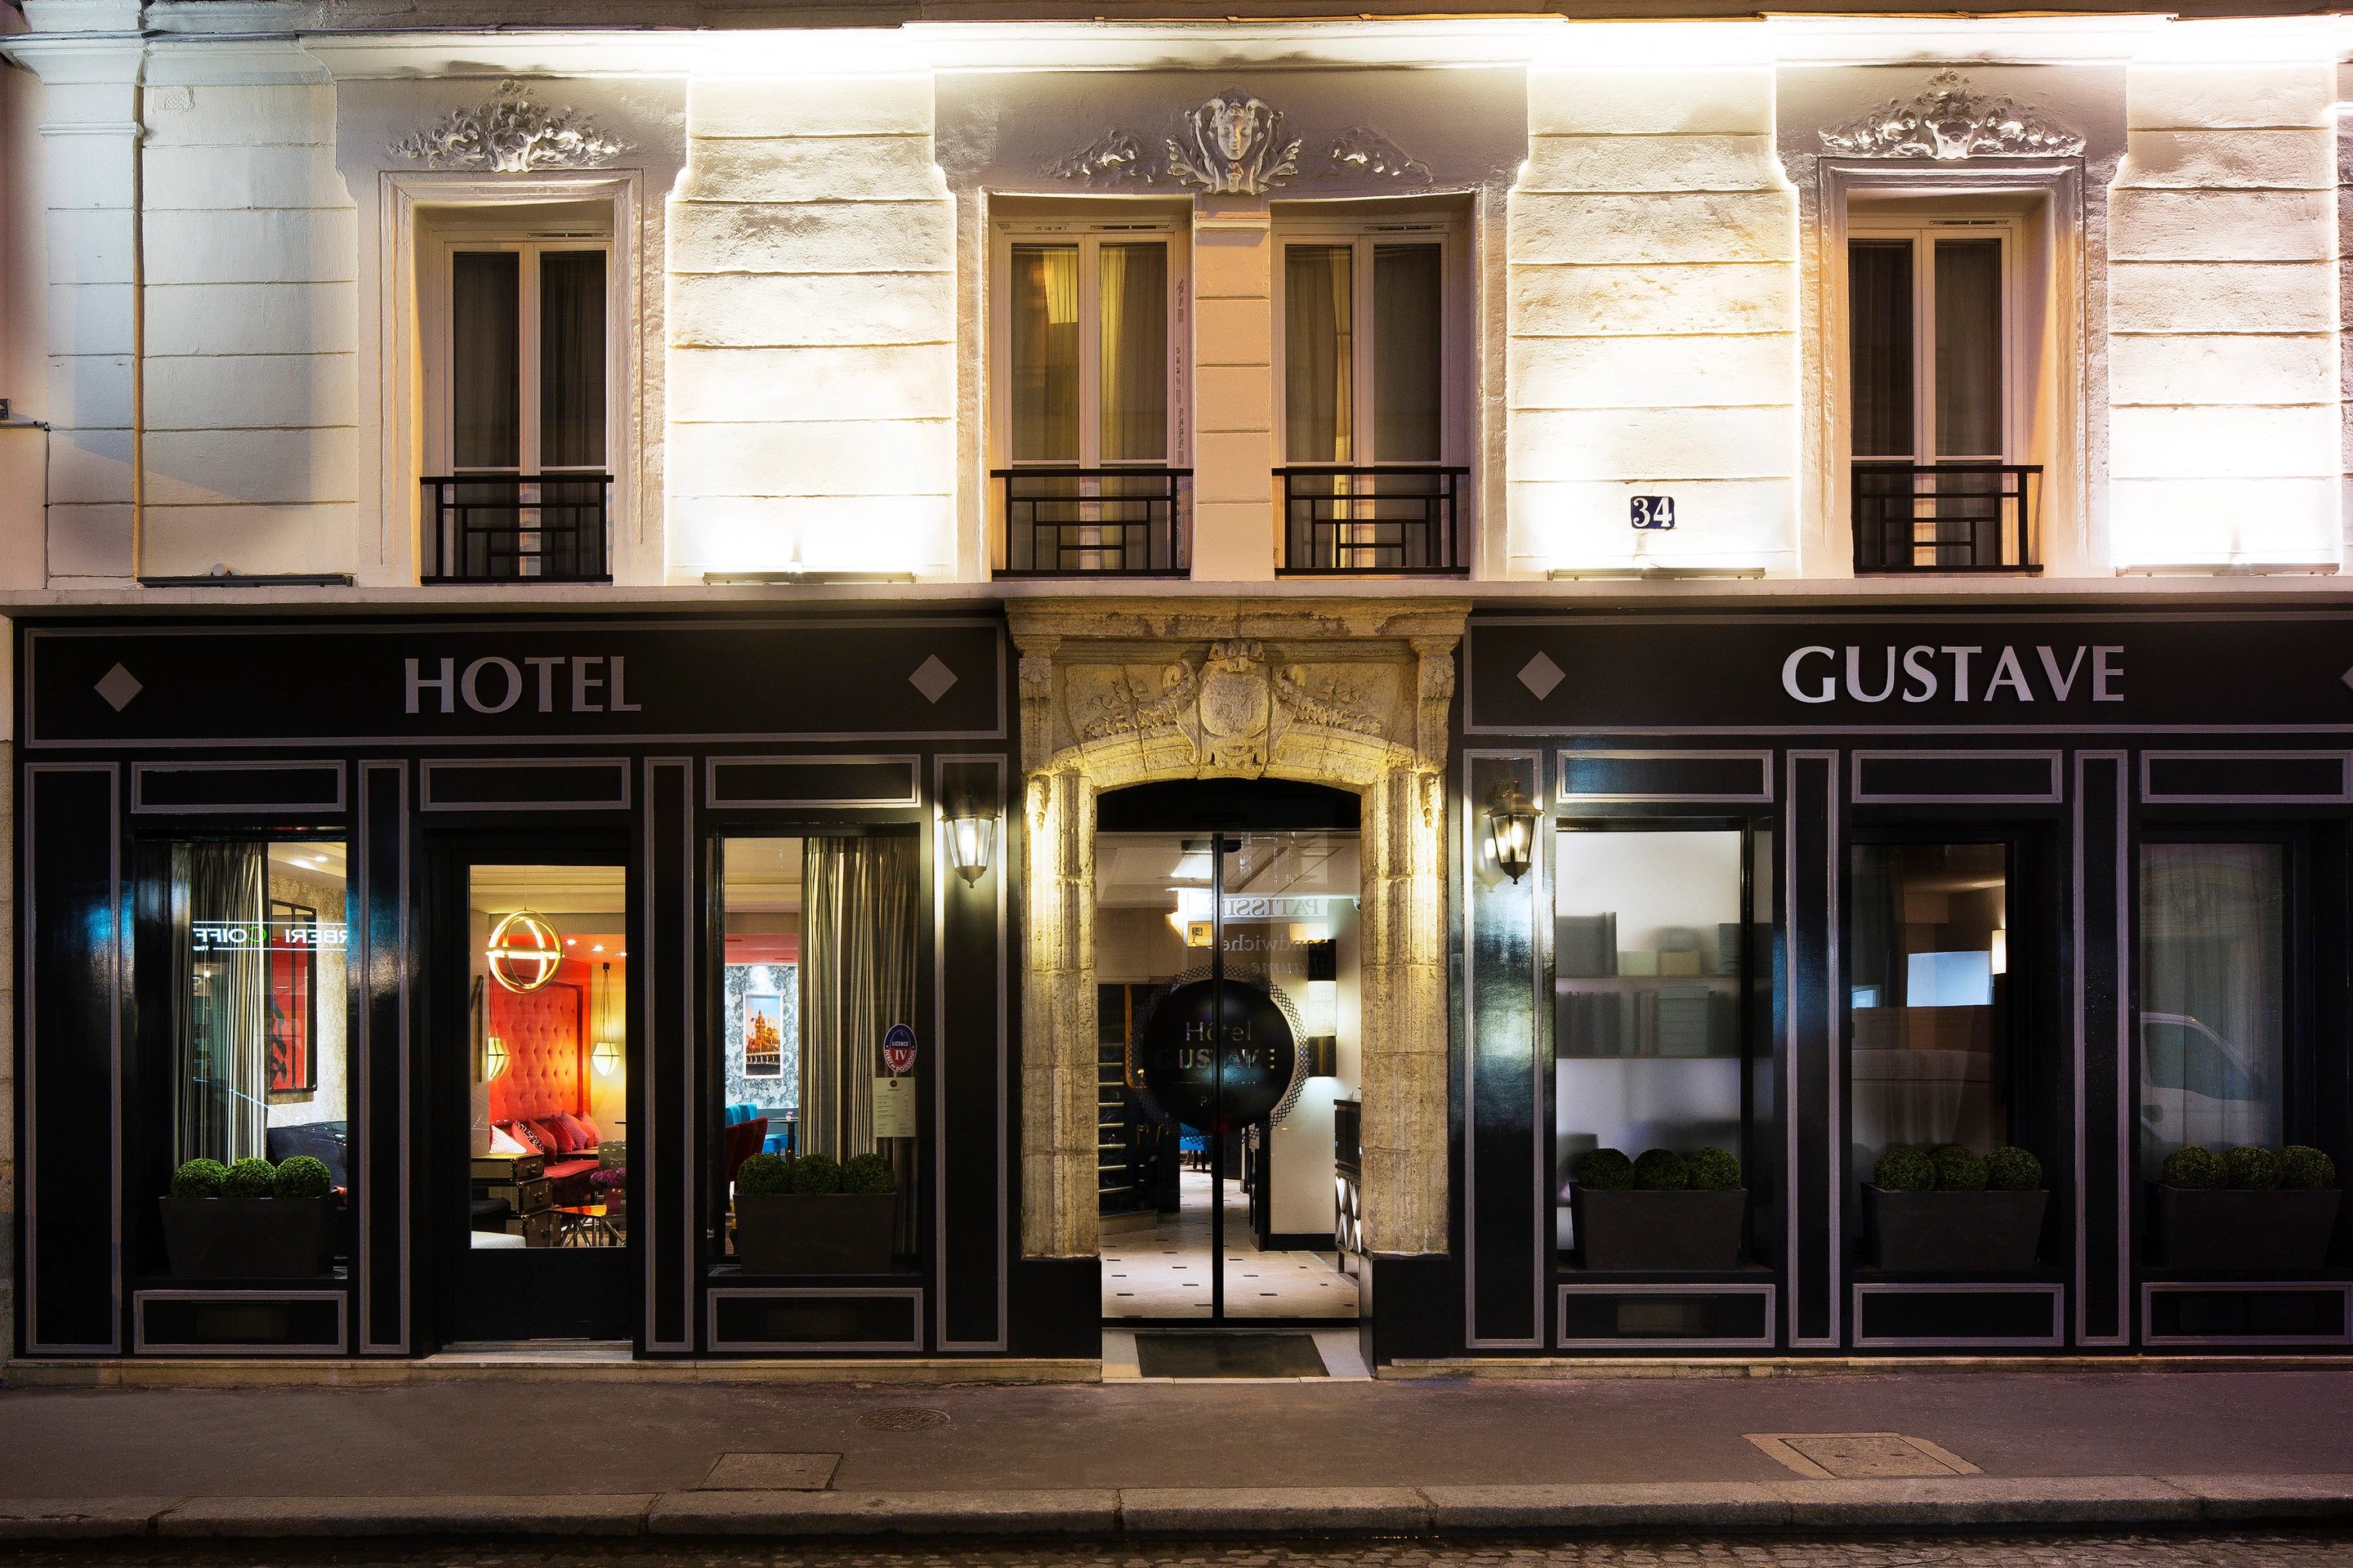 723/Gustave/hotel/HOTEL_GUSTAVE_-_Facade_de_lhotel_-_1.jpg